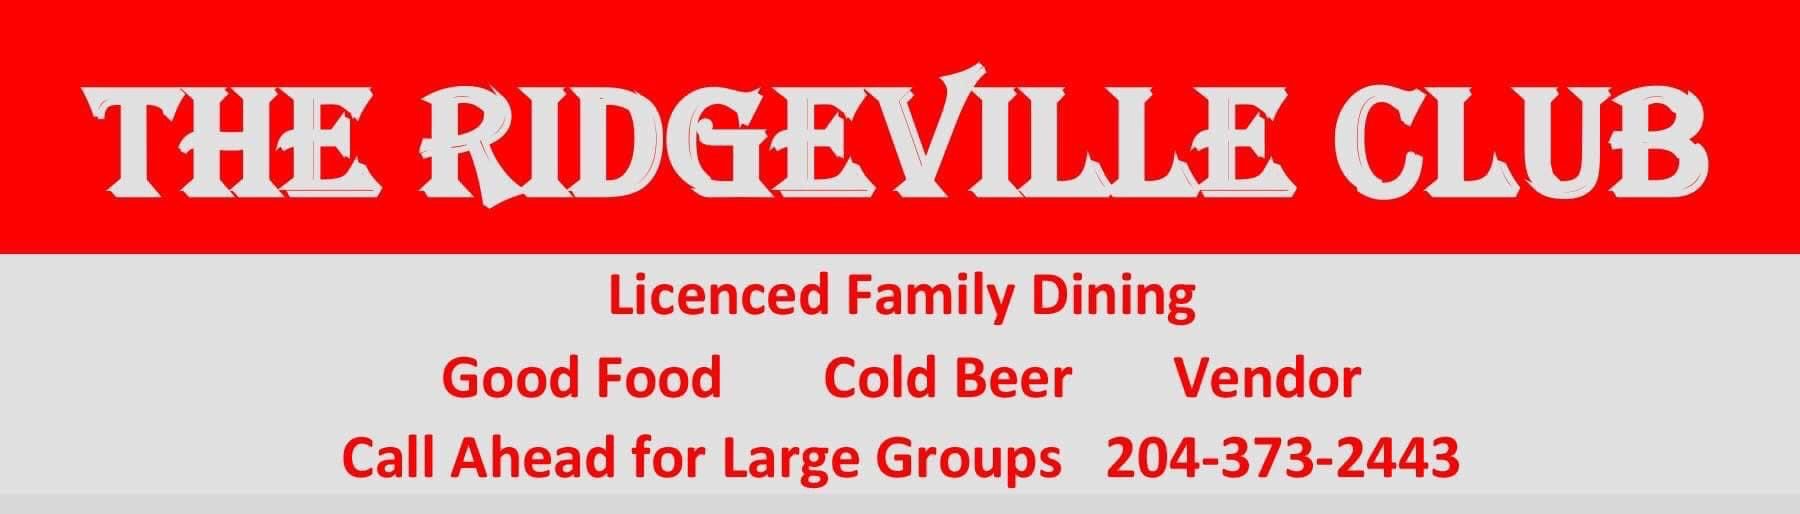 Ridgeville Club